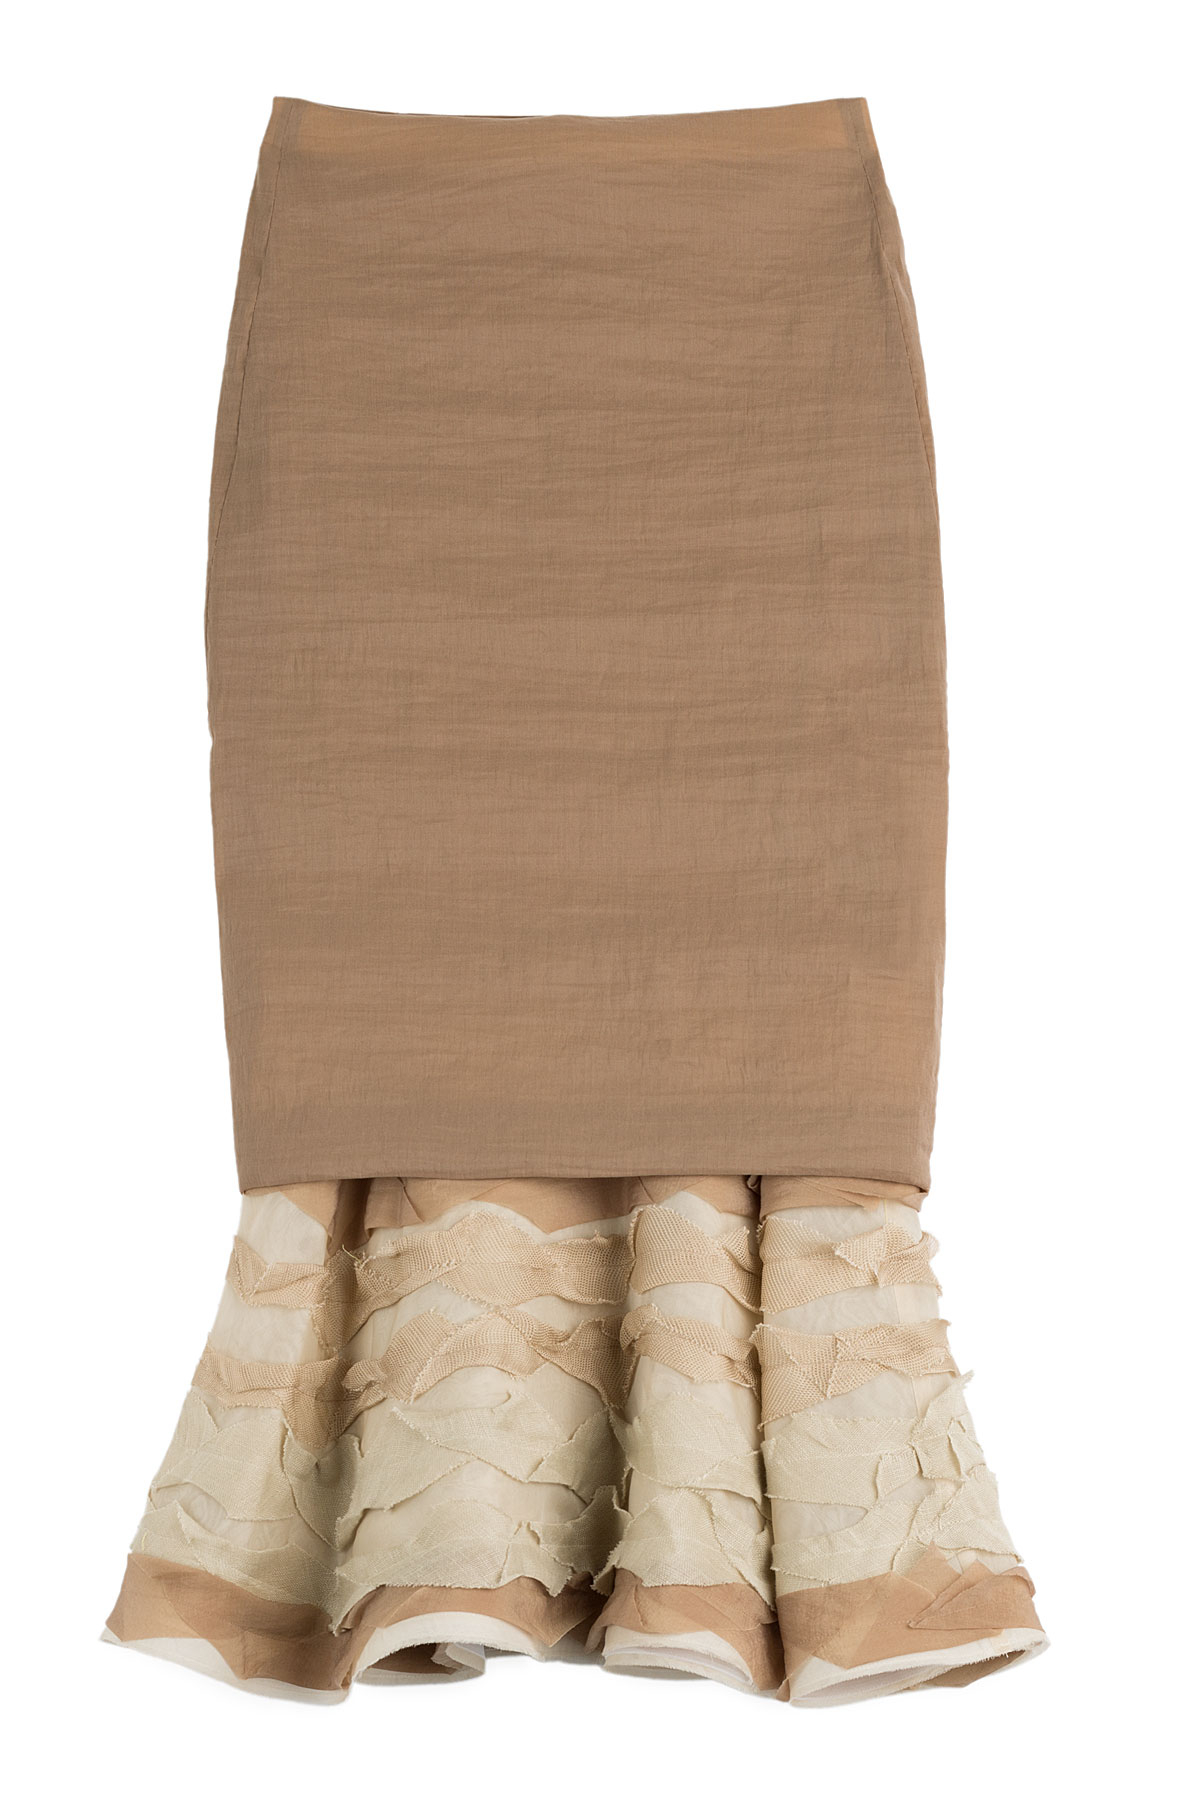 Lyst - Donna Karan Pencil Skirt With Ruffled Hem - Camel in Natural